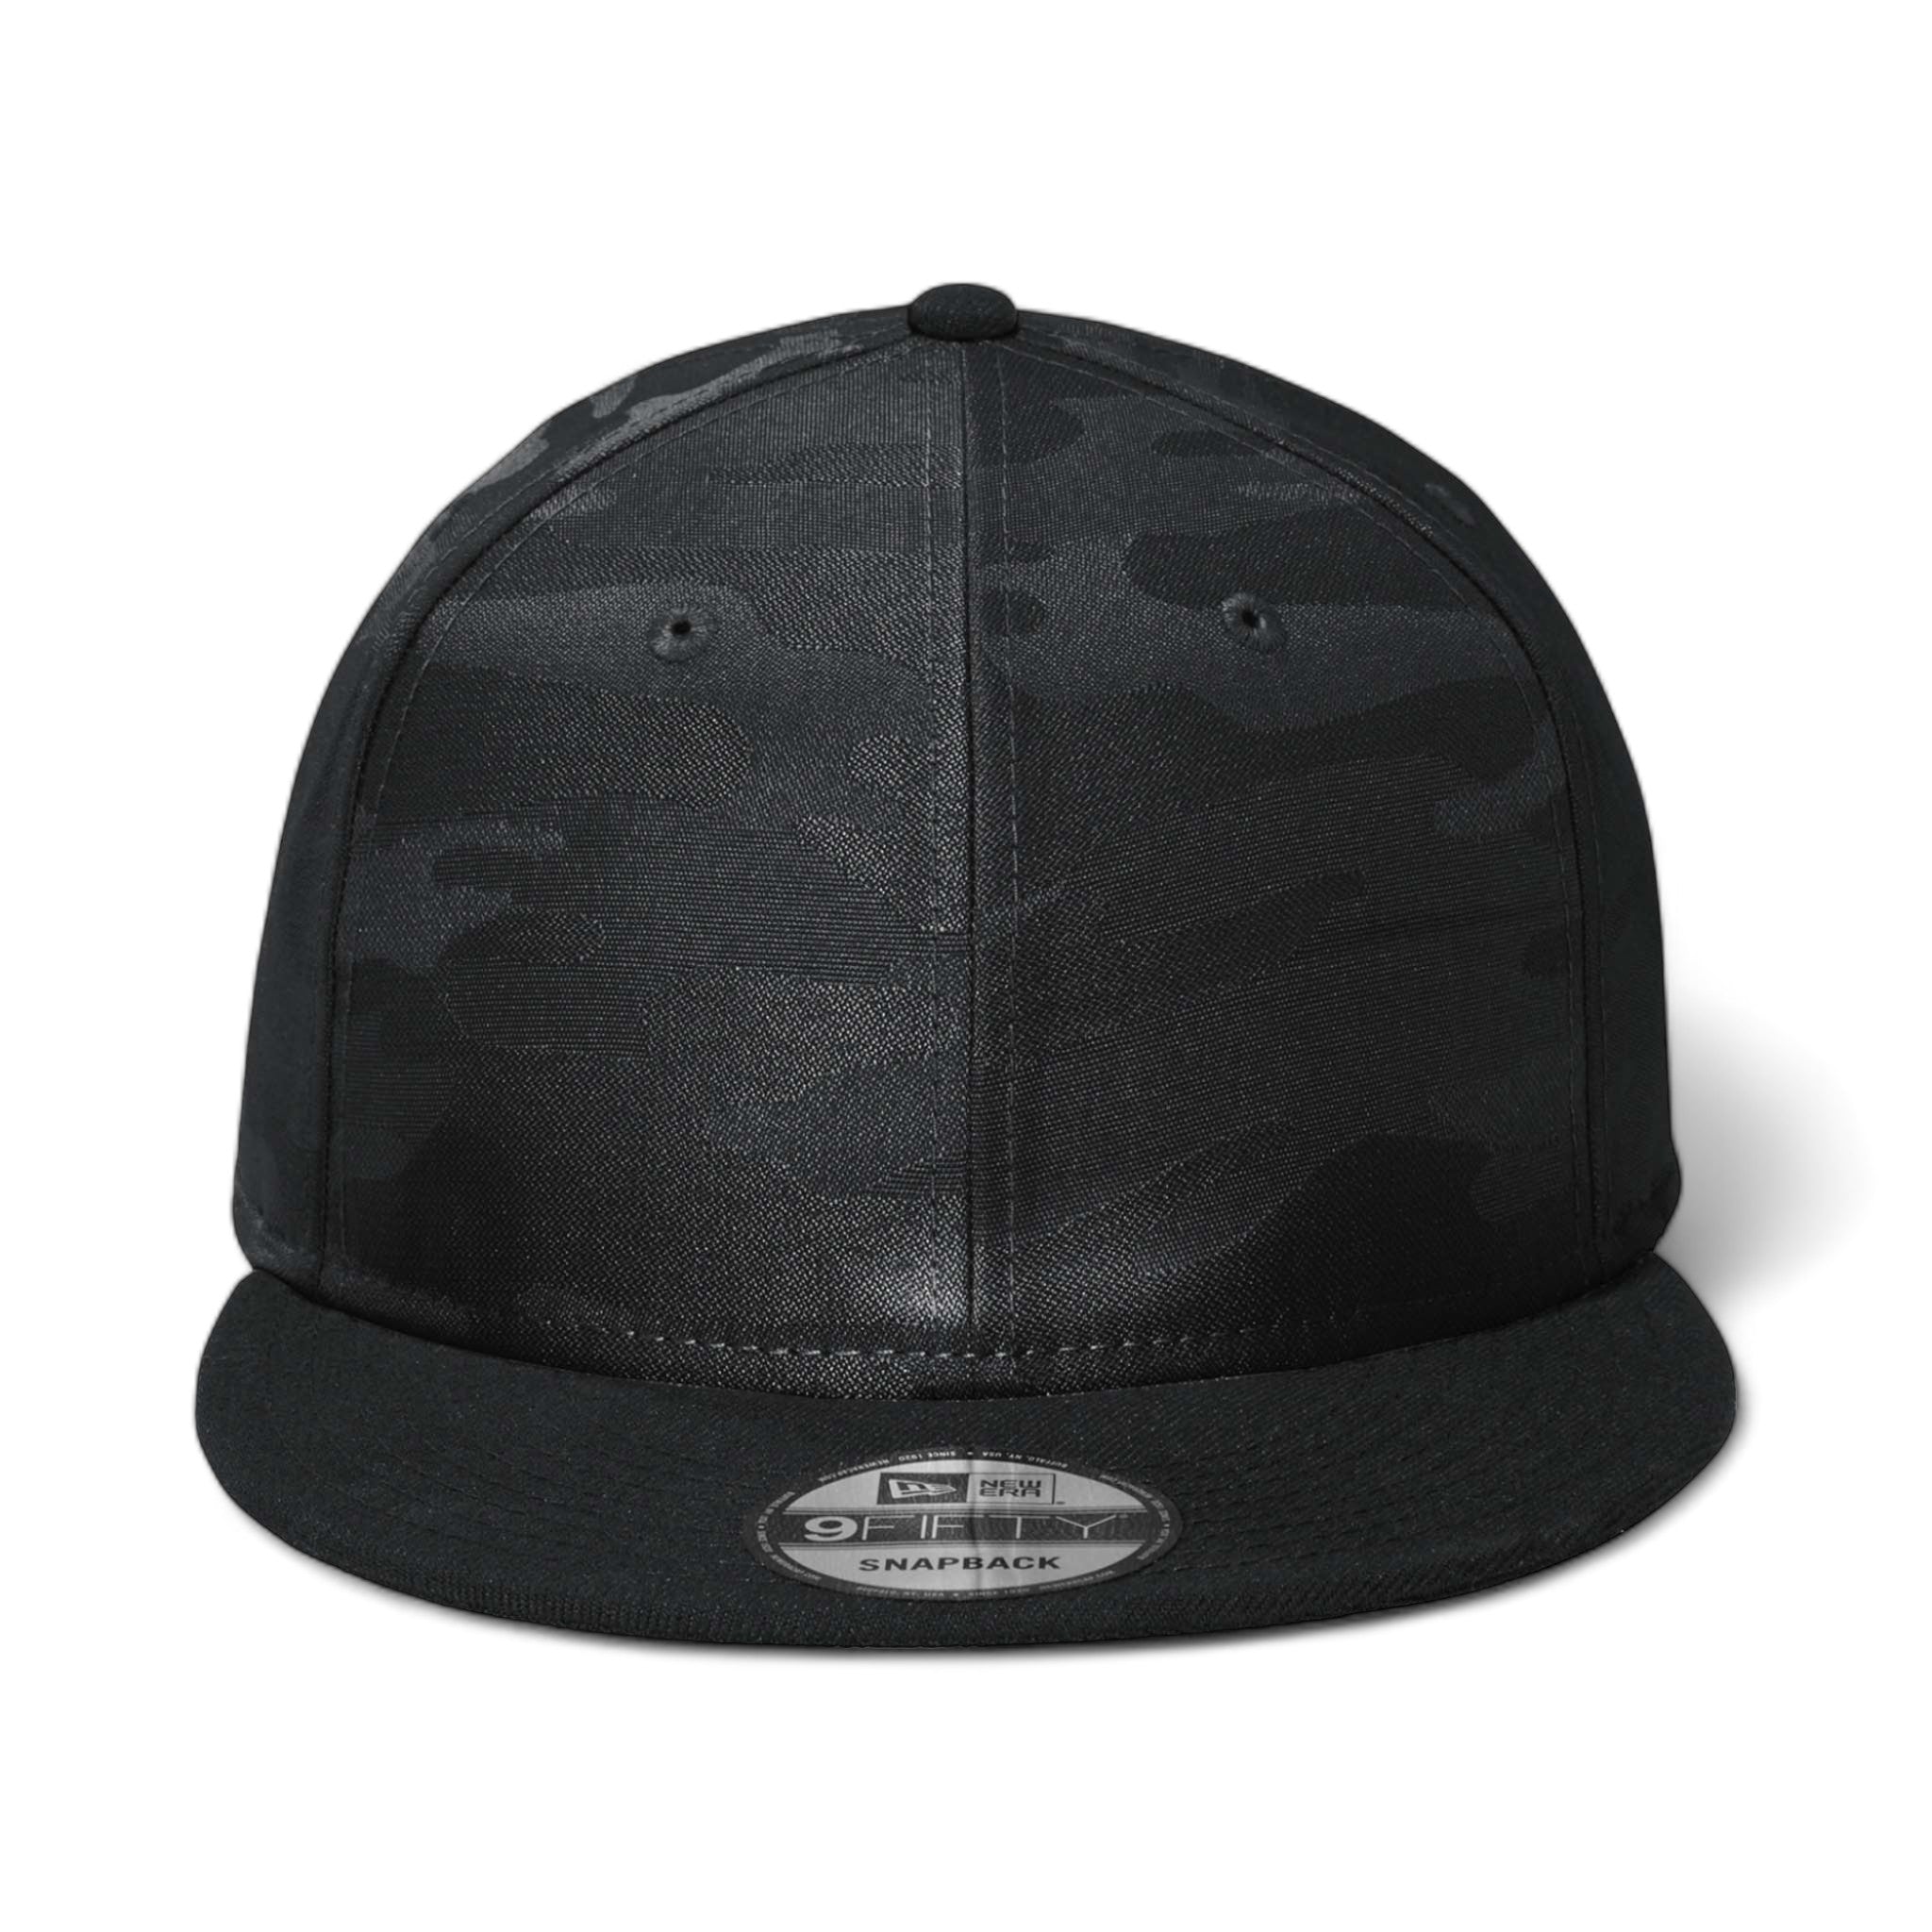 Front view of New Era NE407 custom hat in black and black camo